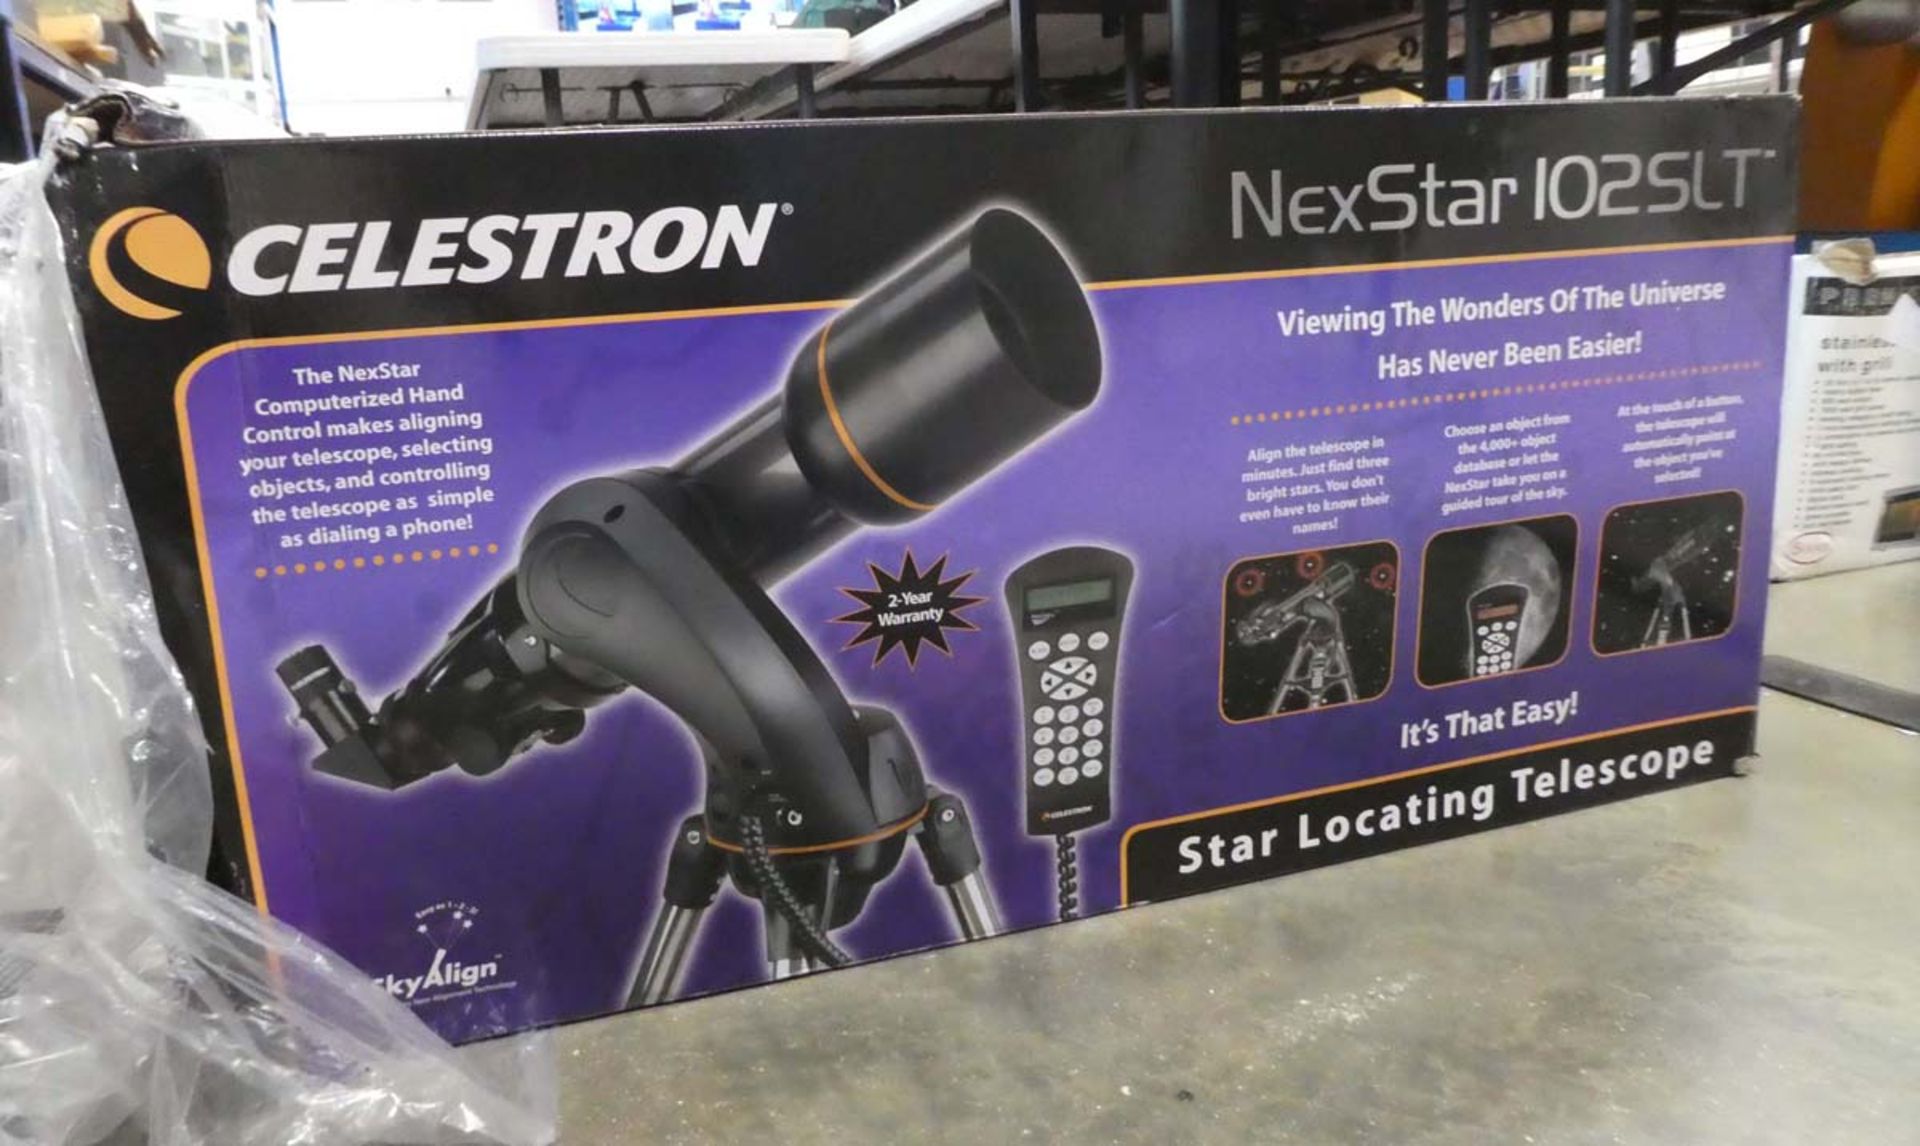 Celestron Nexstar 102SLT telescope in box